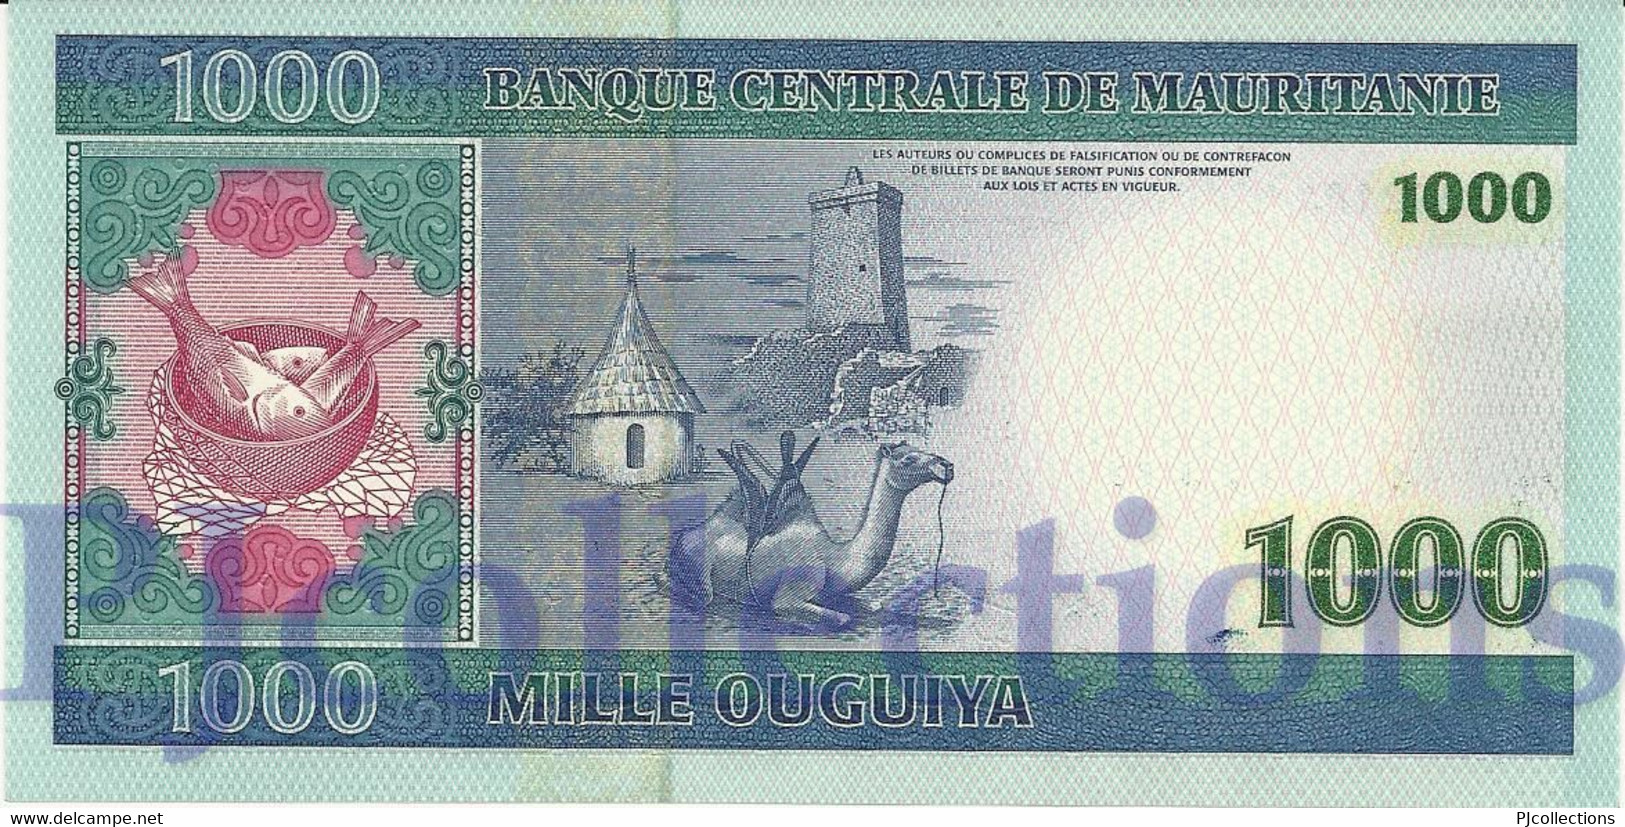 MAURITANIA 1000 OUGUIYA 2004 PICK 13a UNC - Mauritanie